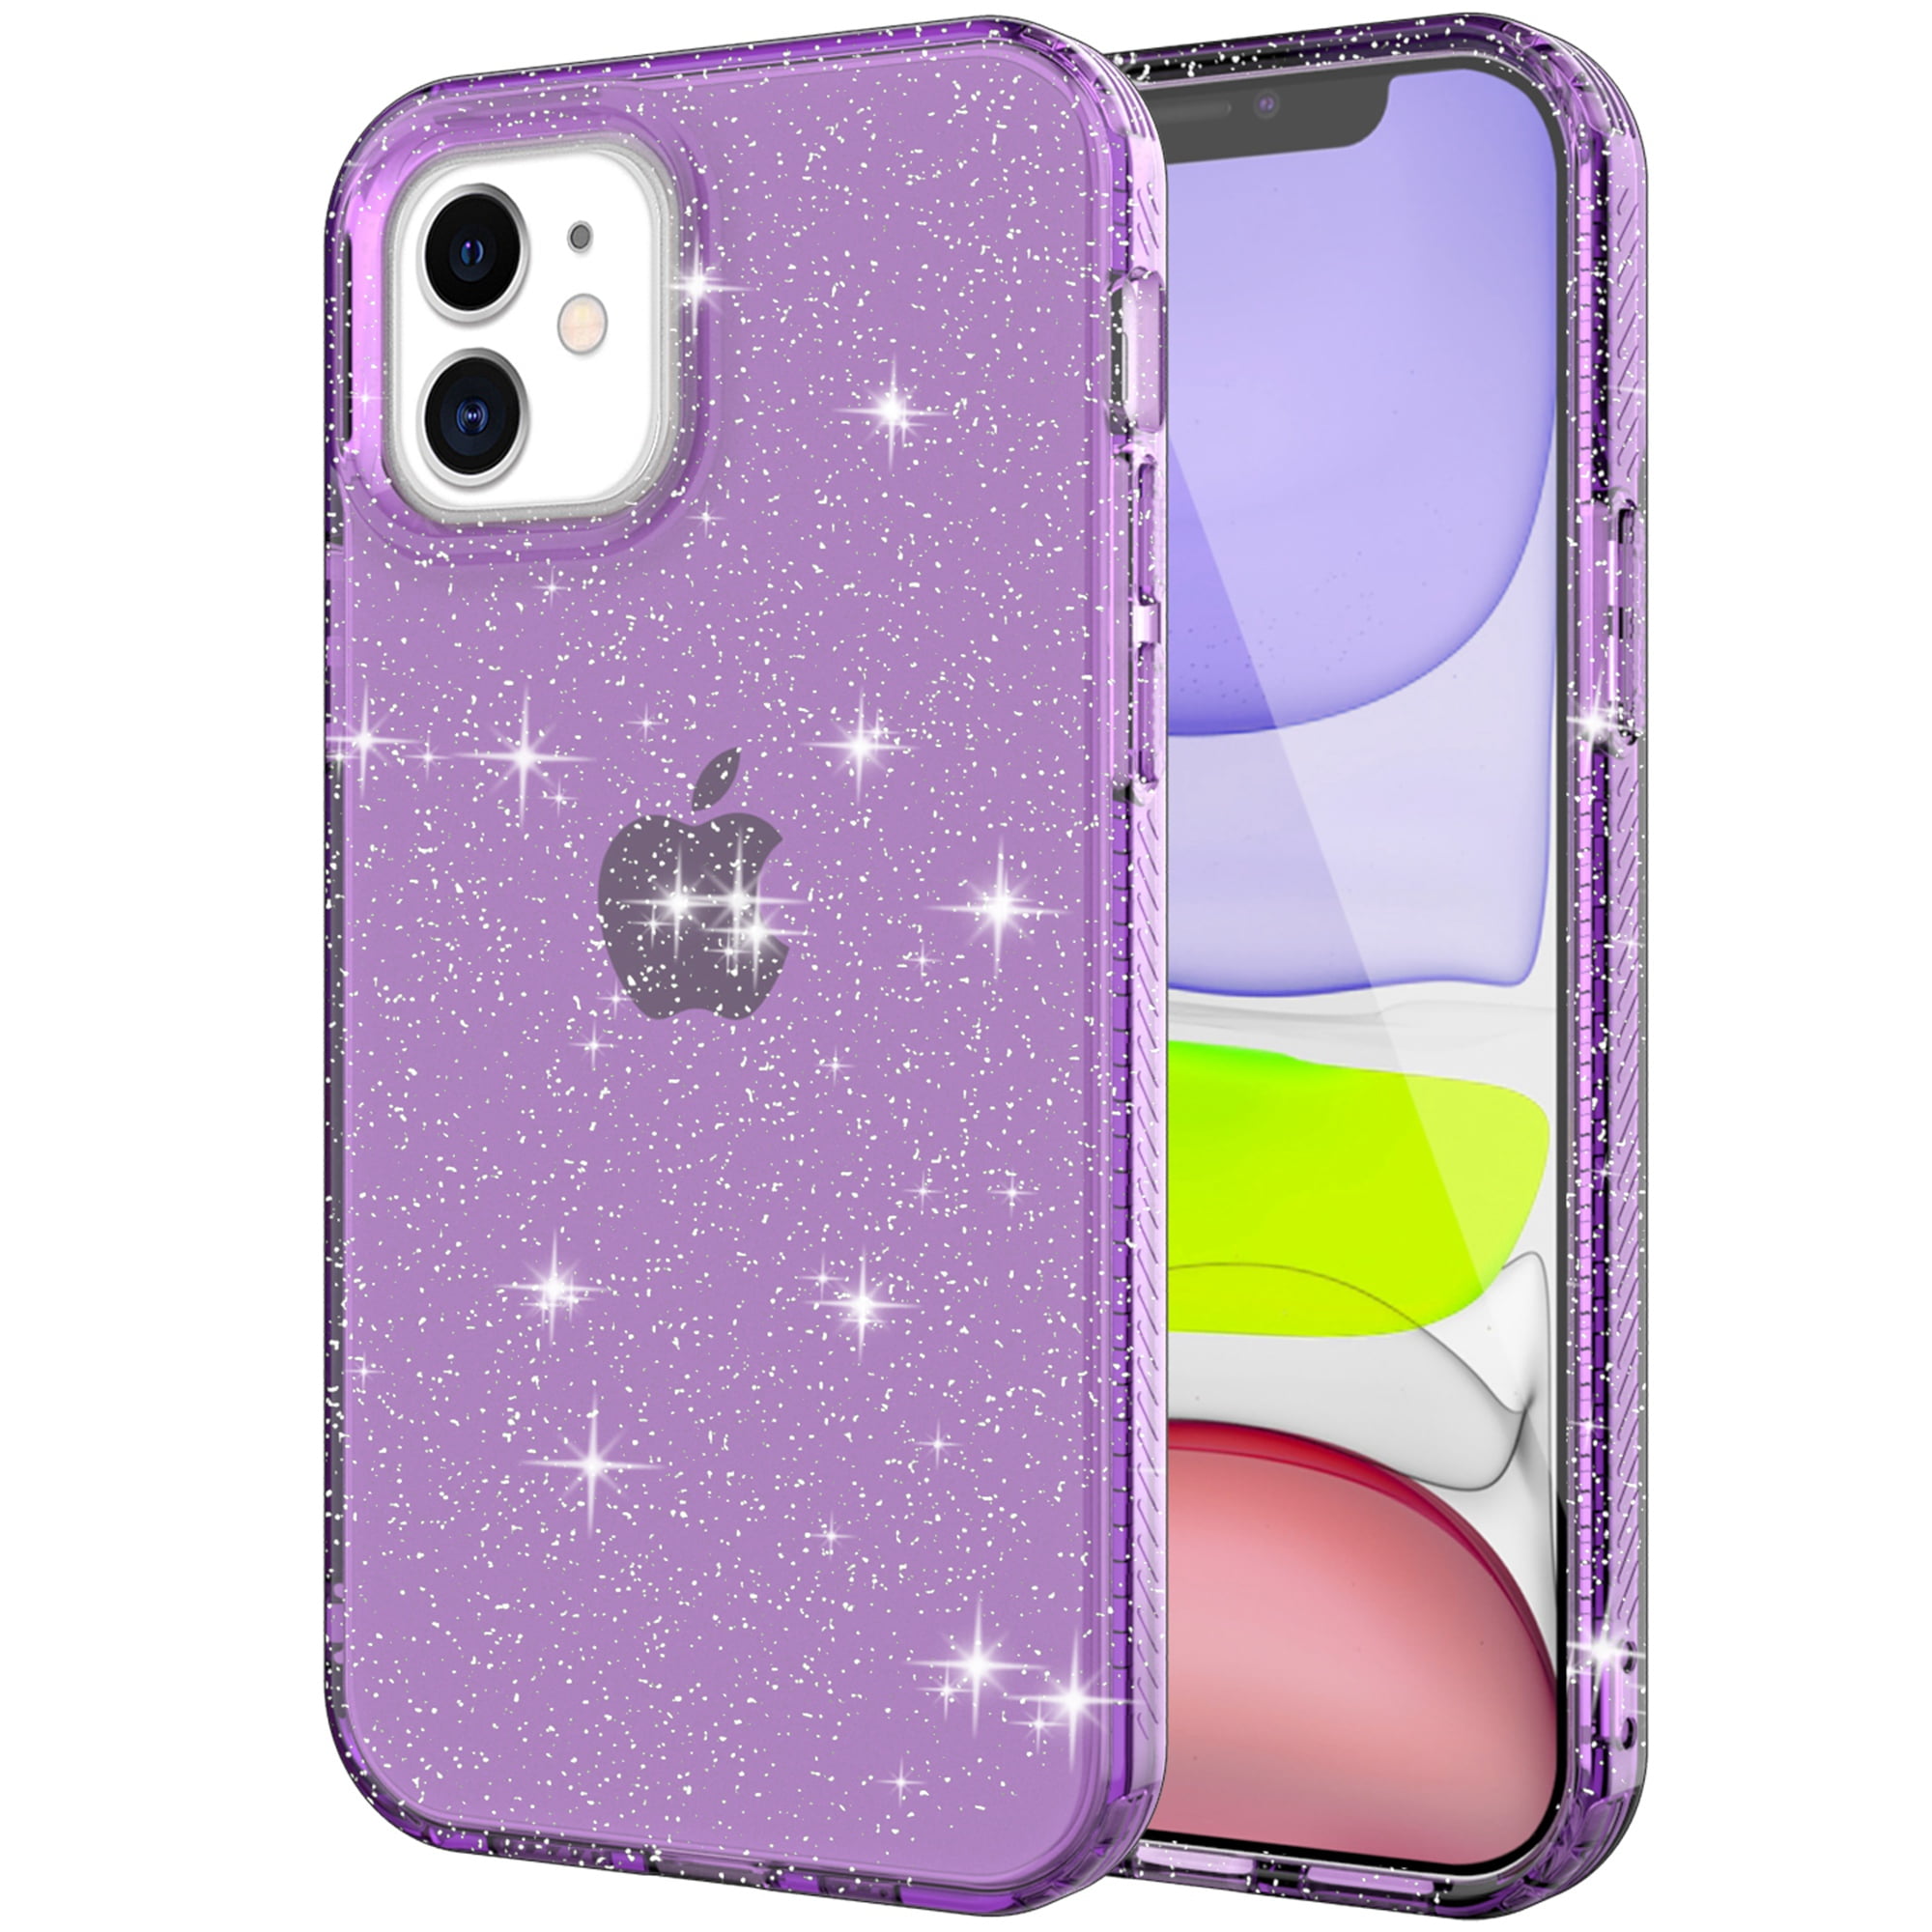 Iphone 12 Mini Clear Case Dteck Bling Glitter Transparent Clear Case Sparkle Flexible Soft Tpu Protective Cover For Apple Iphone 12 Mini 5 4 Inch Purple Walmart Com Walmart Com